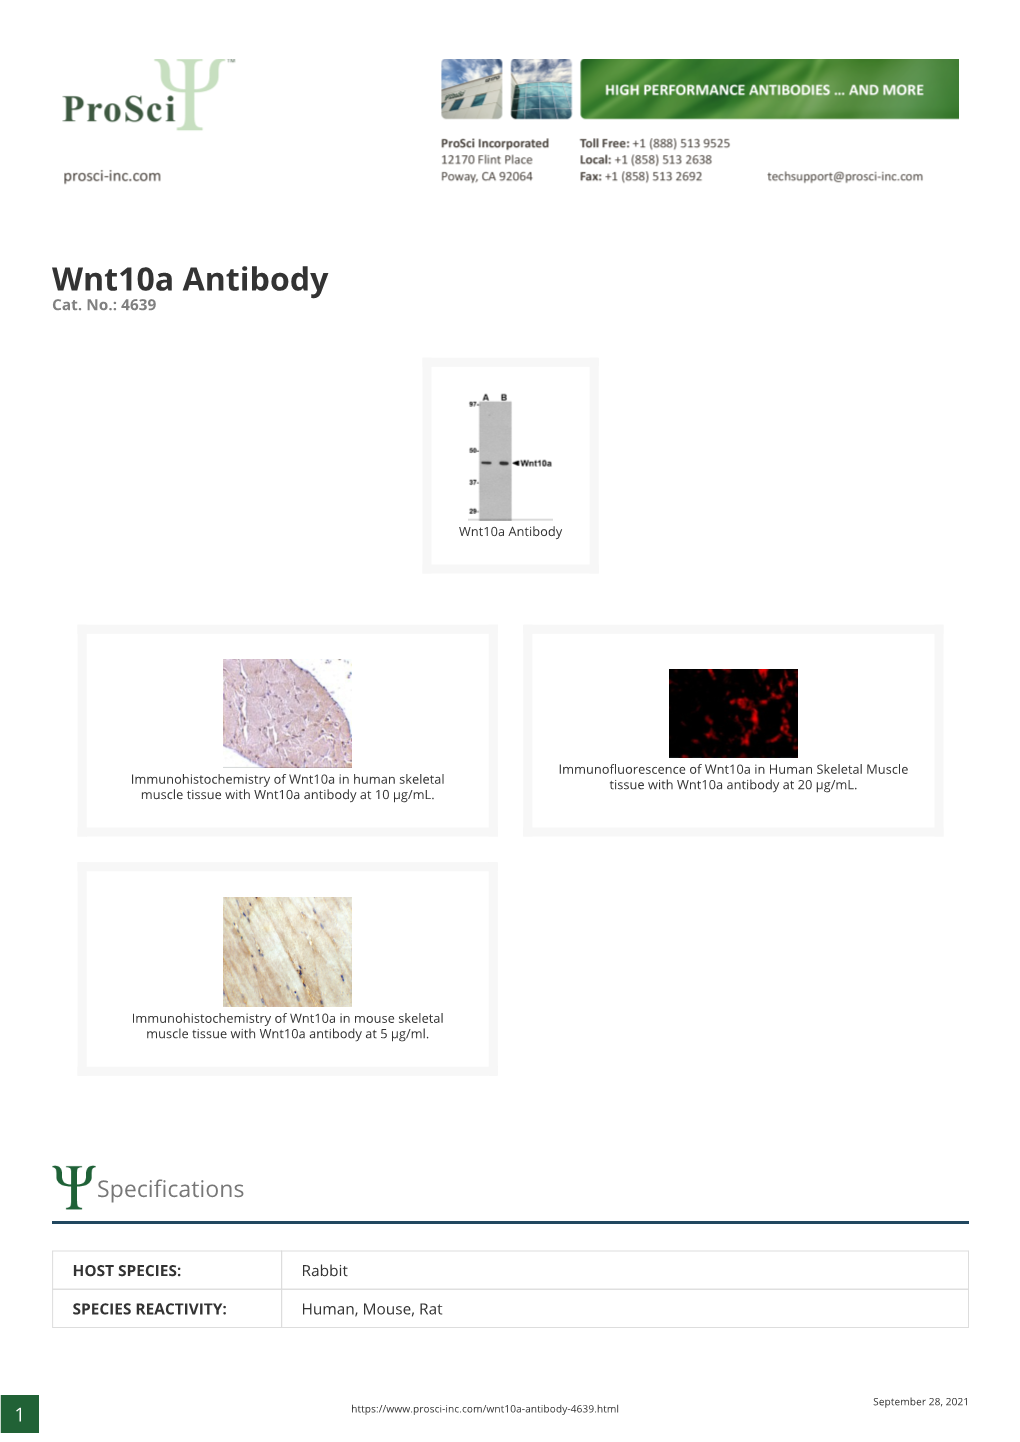 Wnt10a Antibody Cat